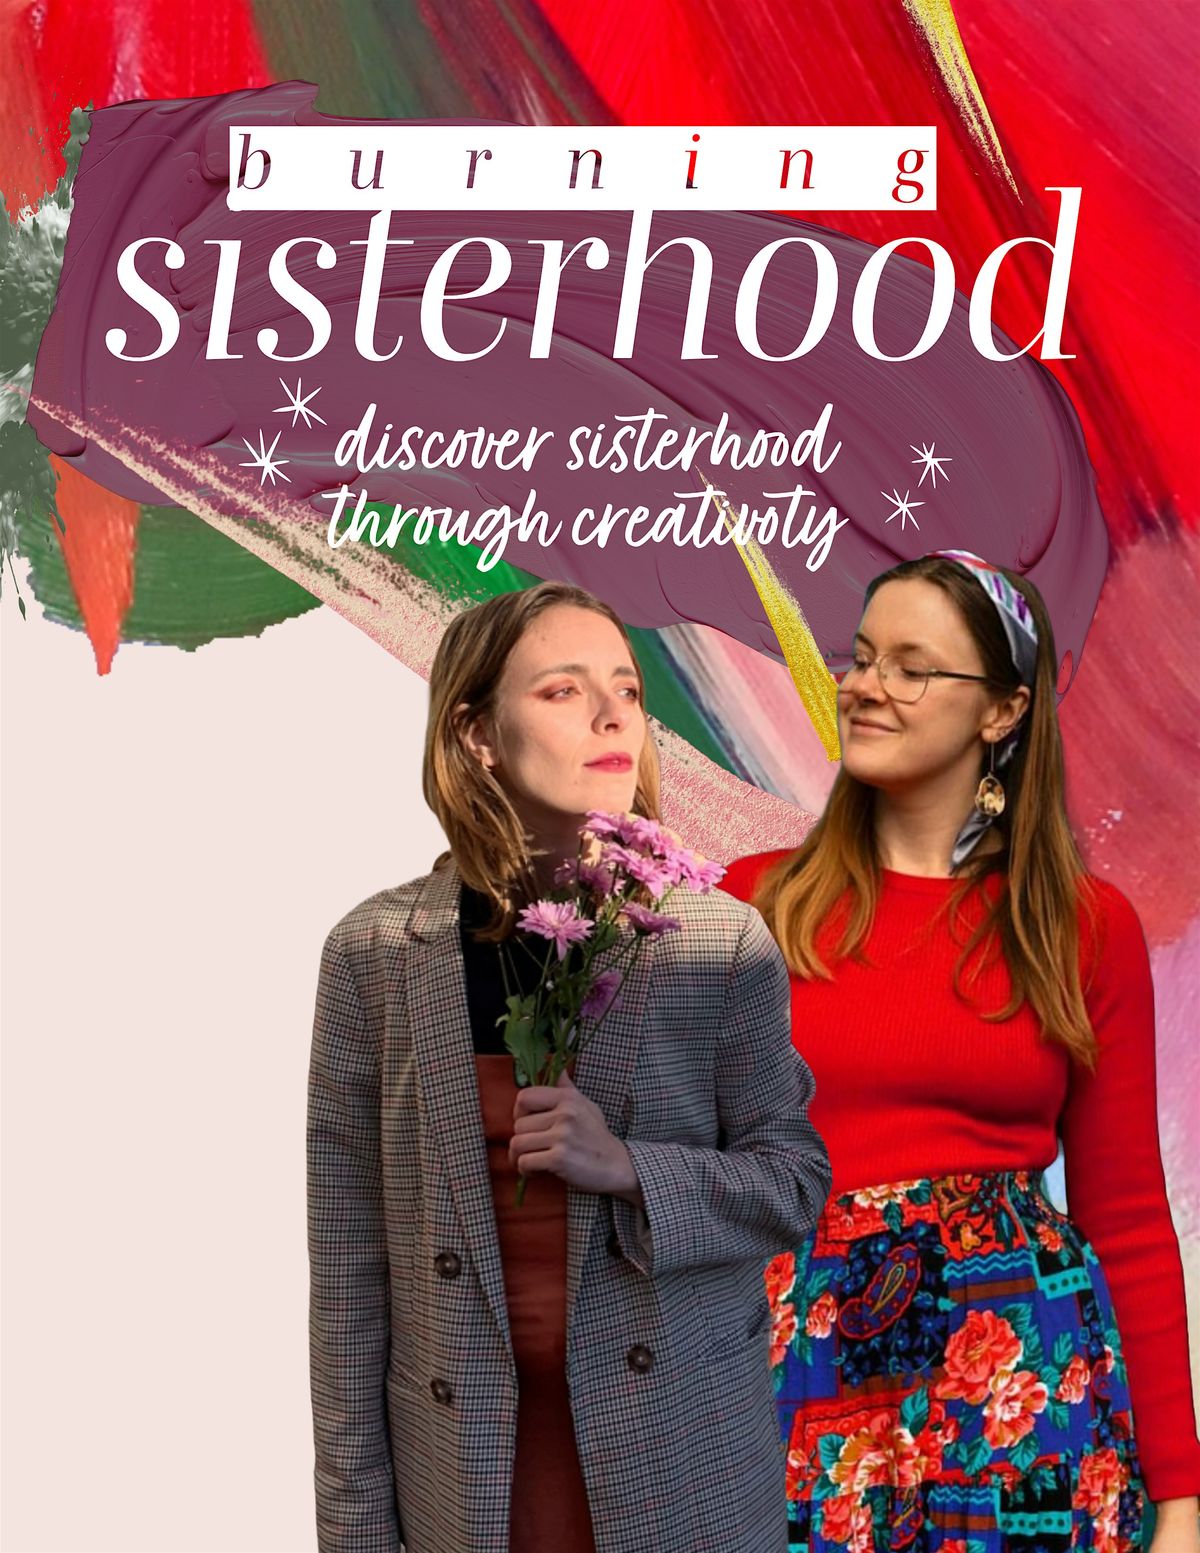 Discovery Sisterhood Through Creativity